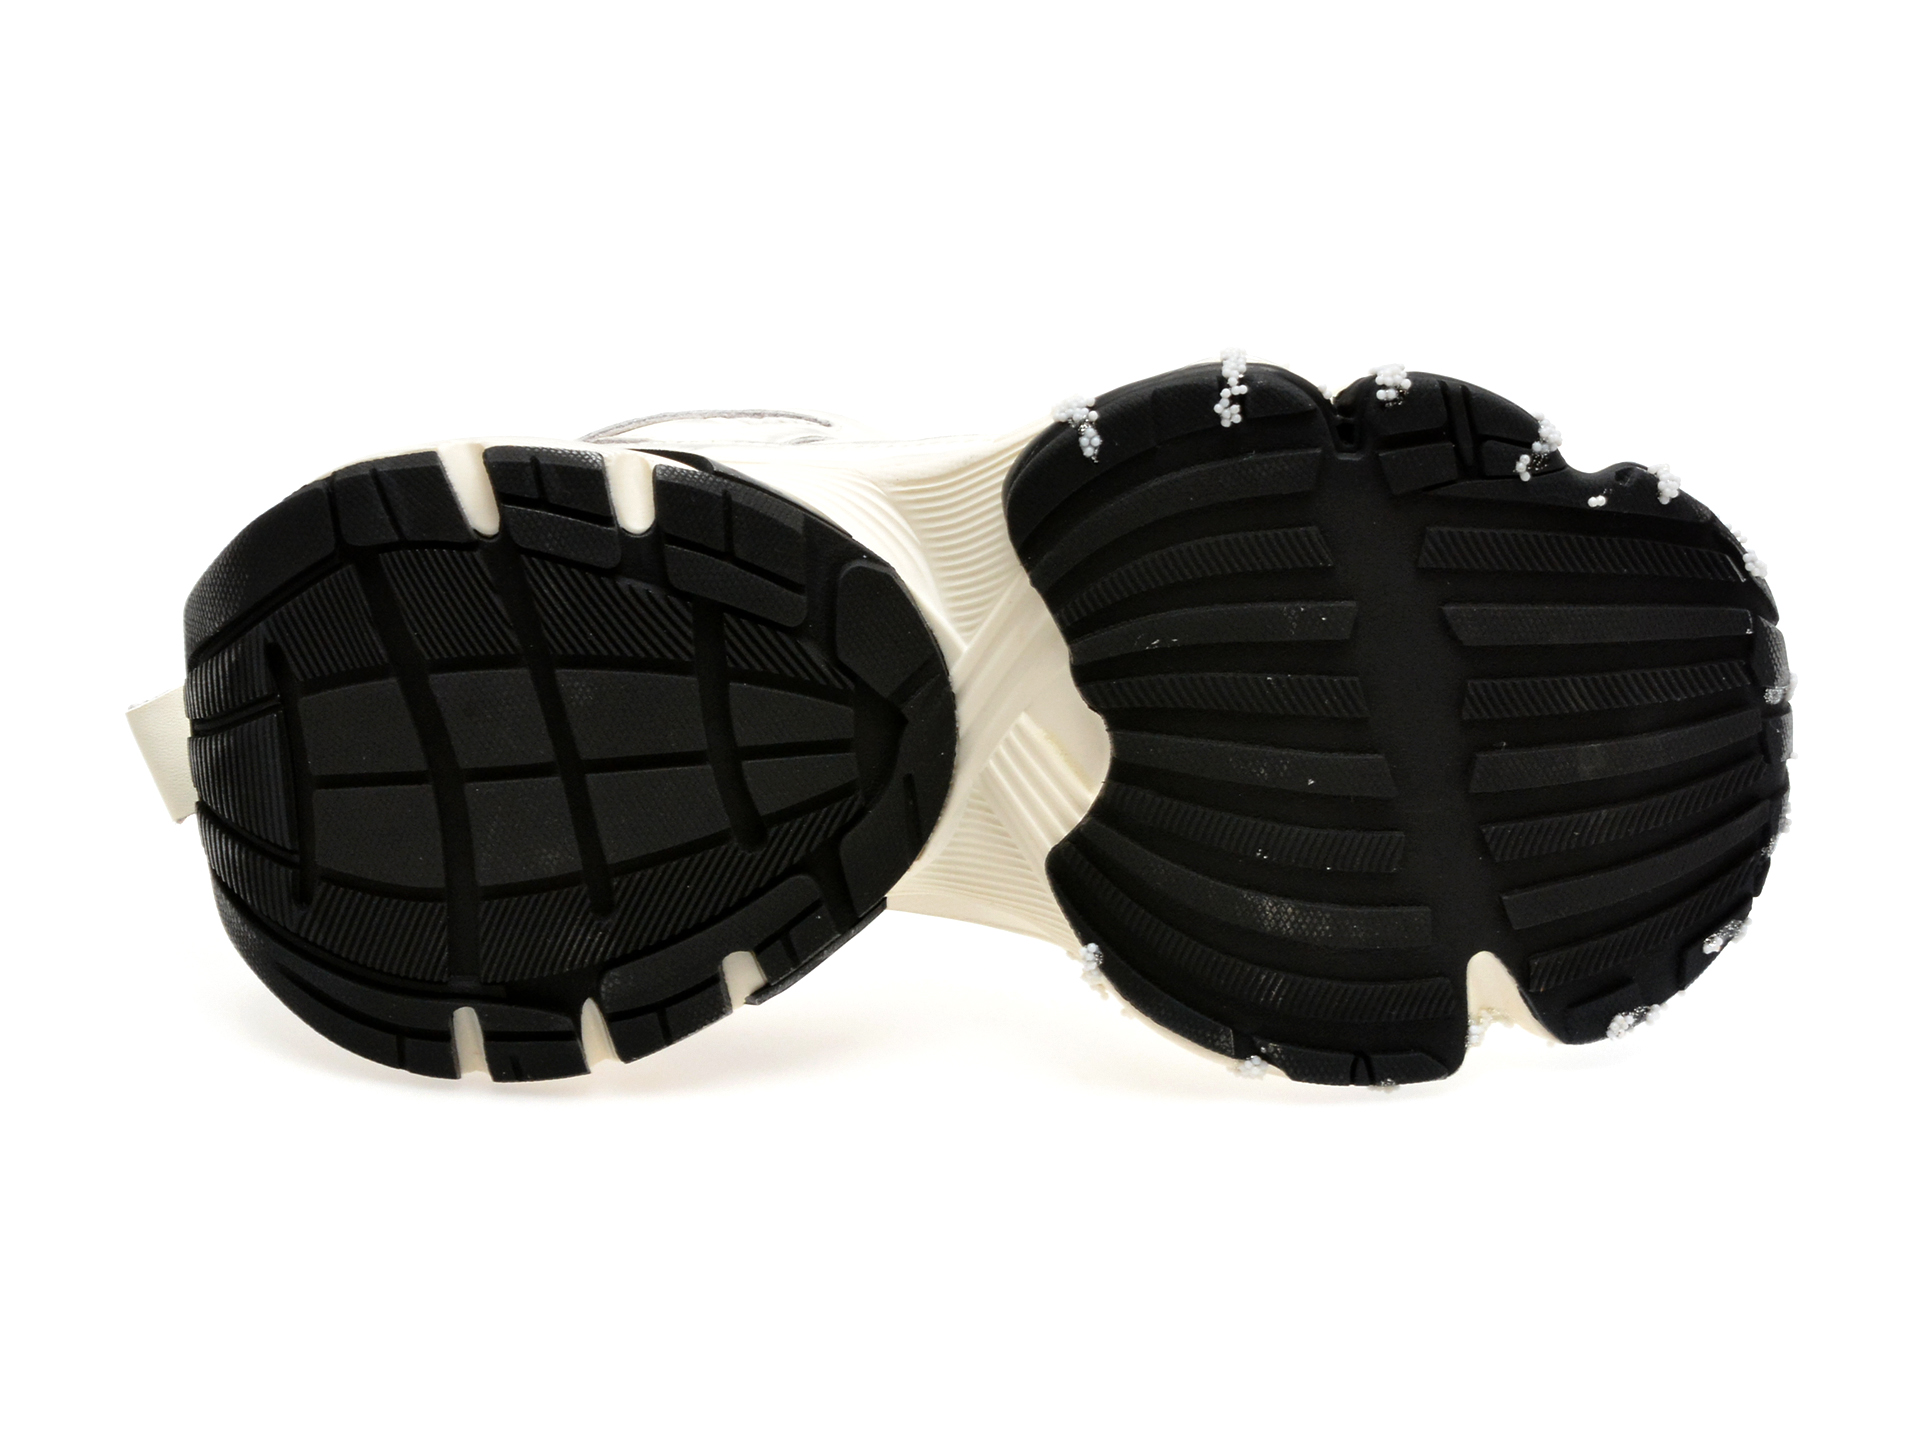 Pantofi sport GRYXX albi, 20242, din material textil